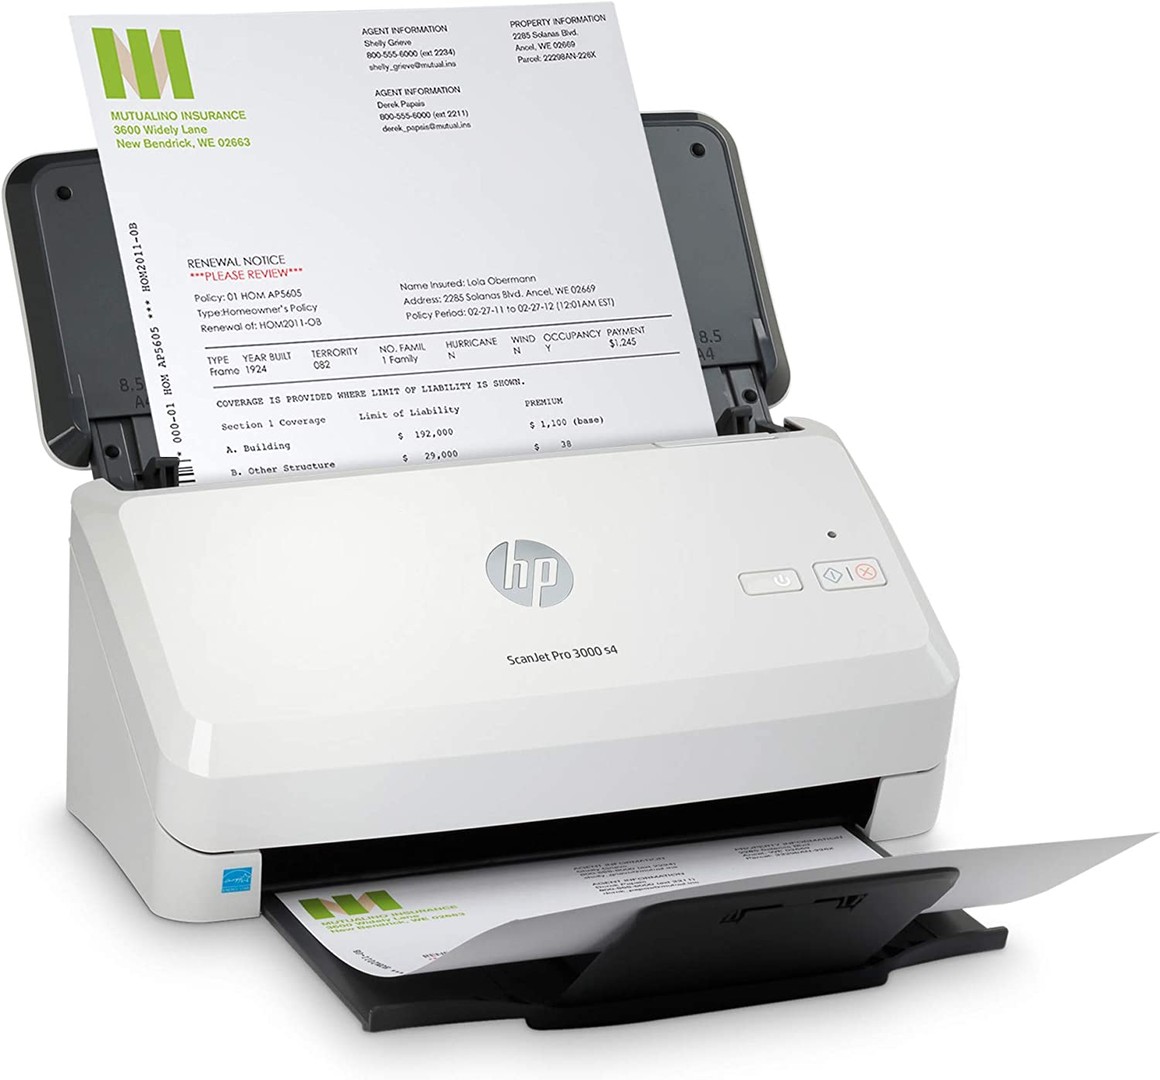 impresoras y scanners - SCANNER HP SCANJET PROFESSIONAL 3000 S4 - DOCUMENT SCANNER - 8.5 IN X 34 IN 